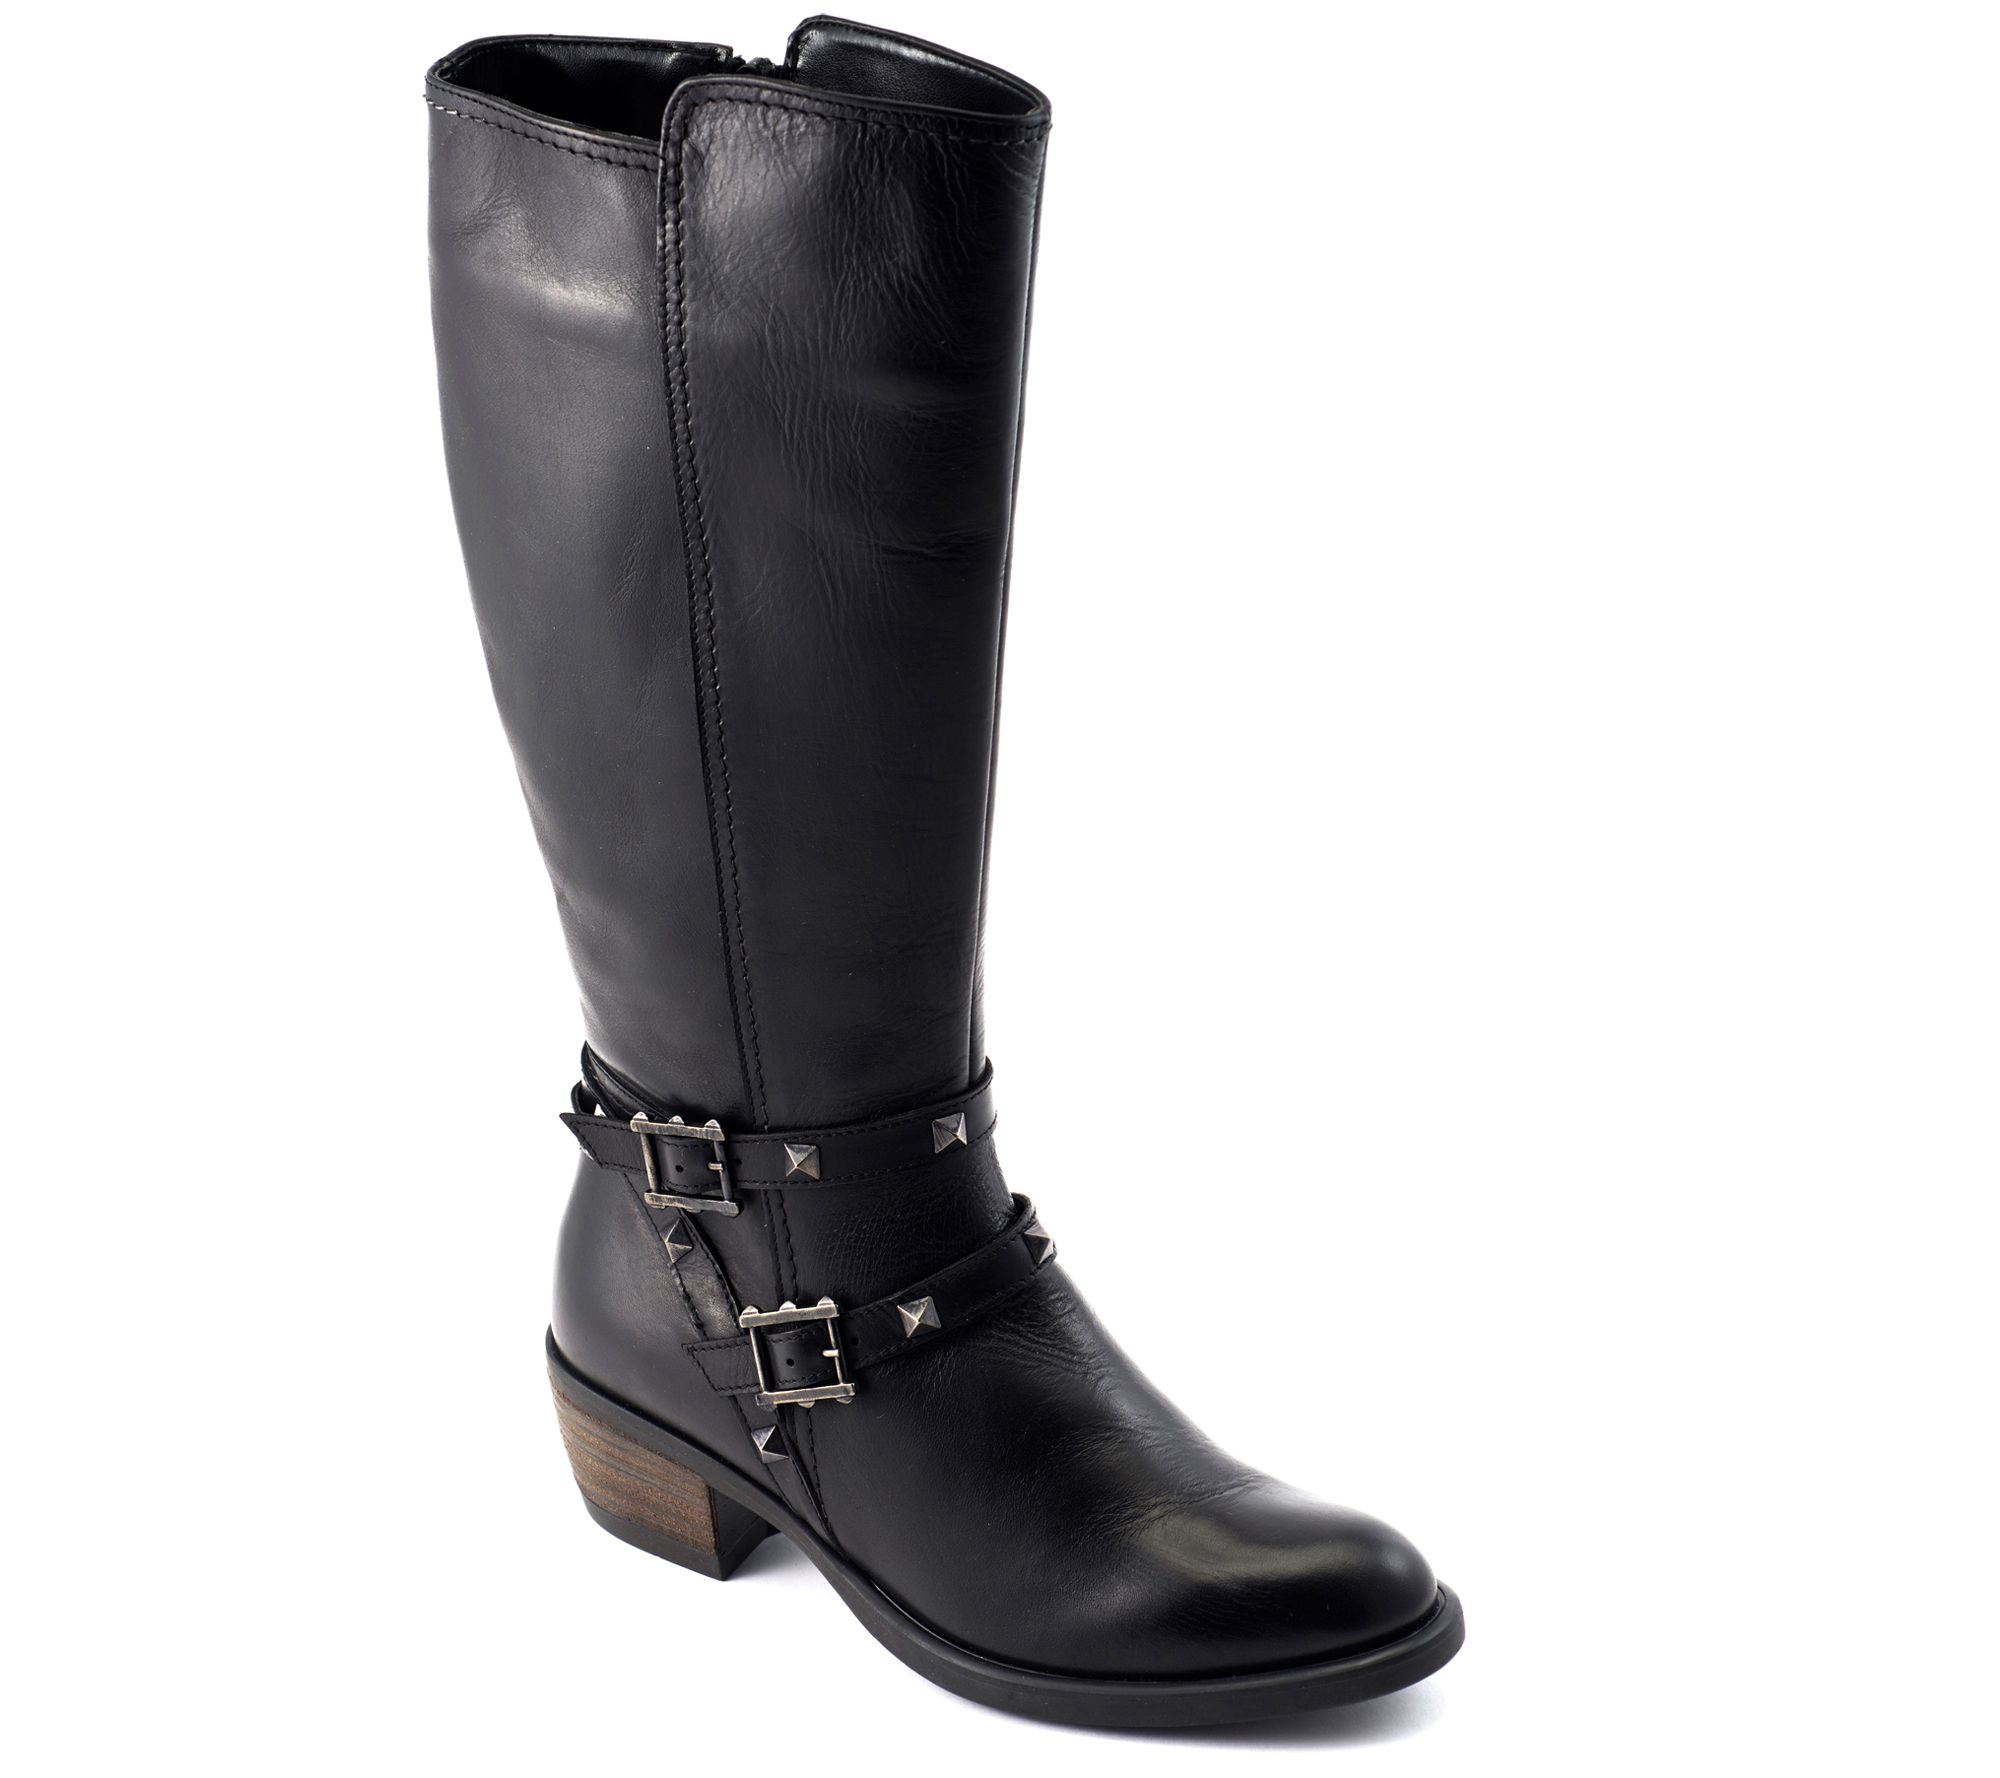 David Tate Knee-High Leather Boots - Novita - QVC.com